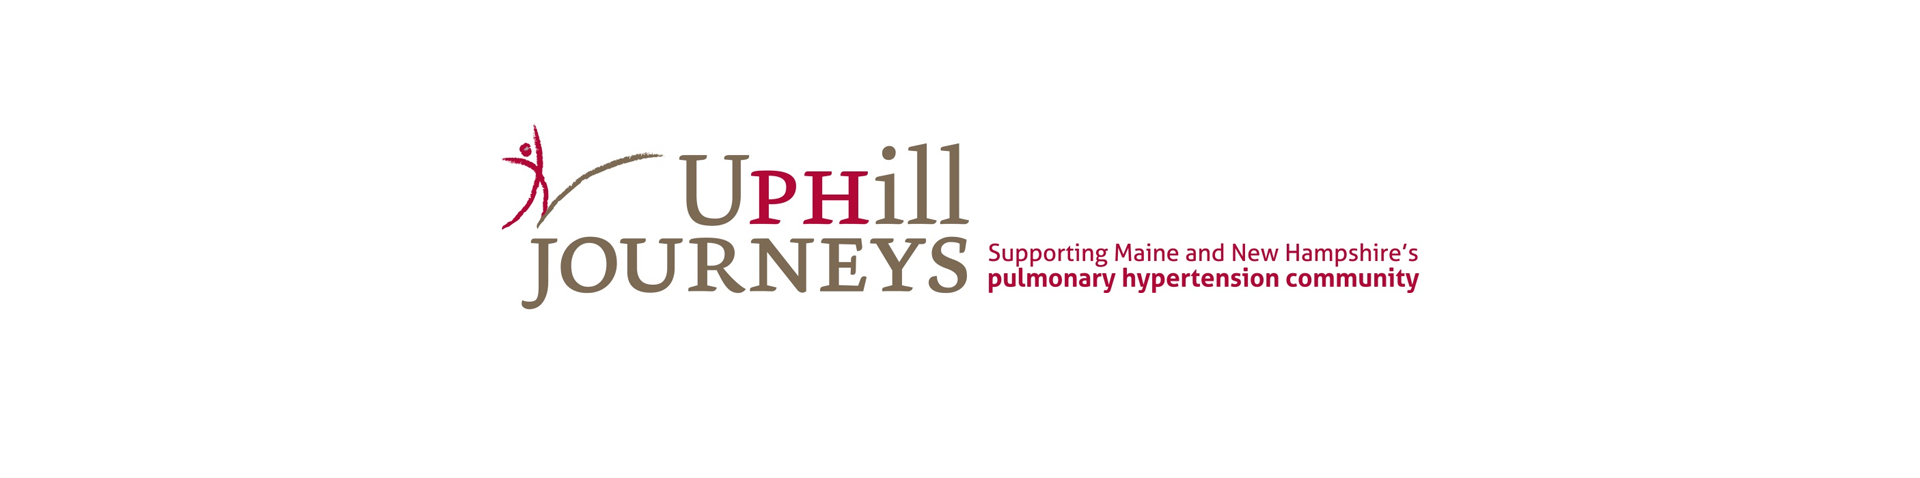 Uphill Journeys logo 